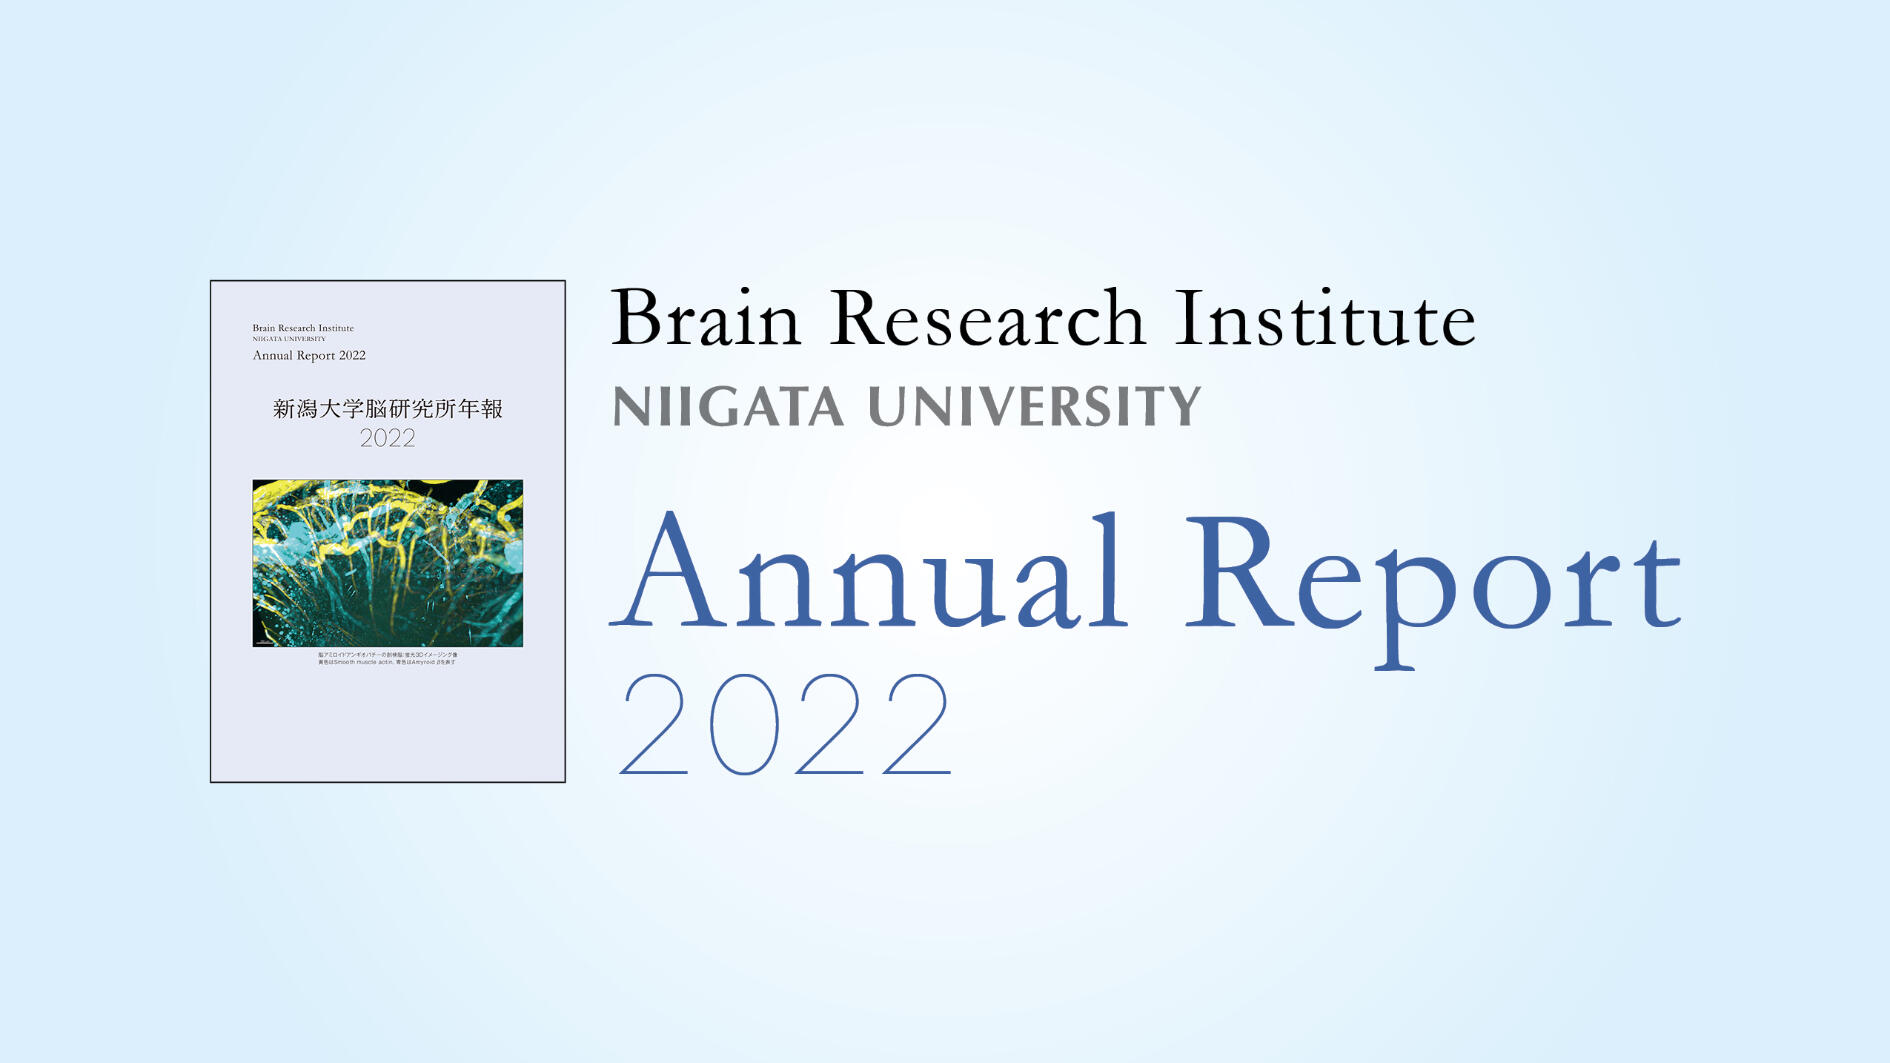 BRI Annual Report 2022 issued